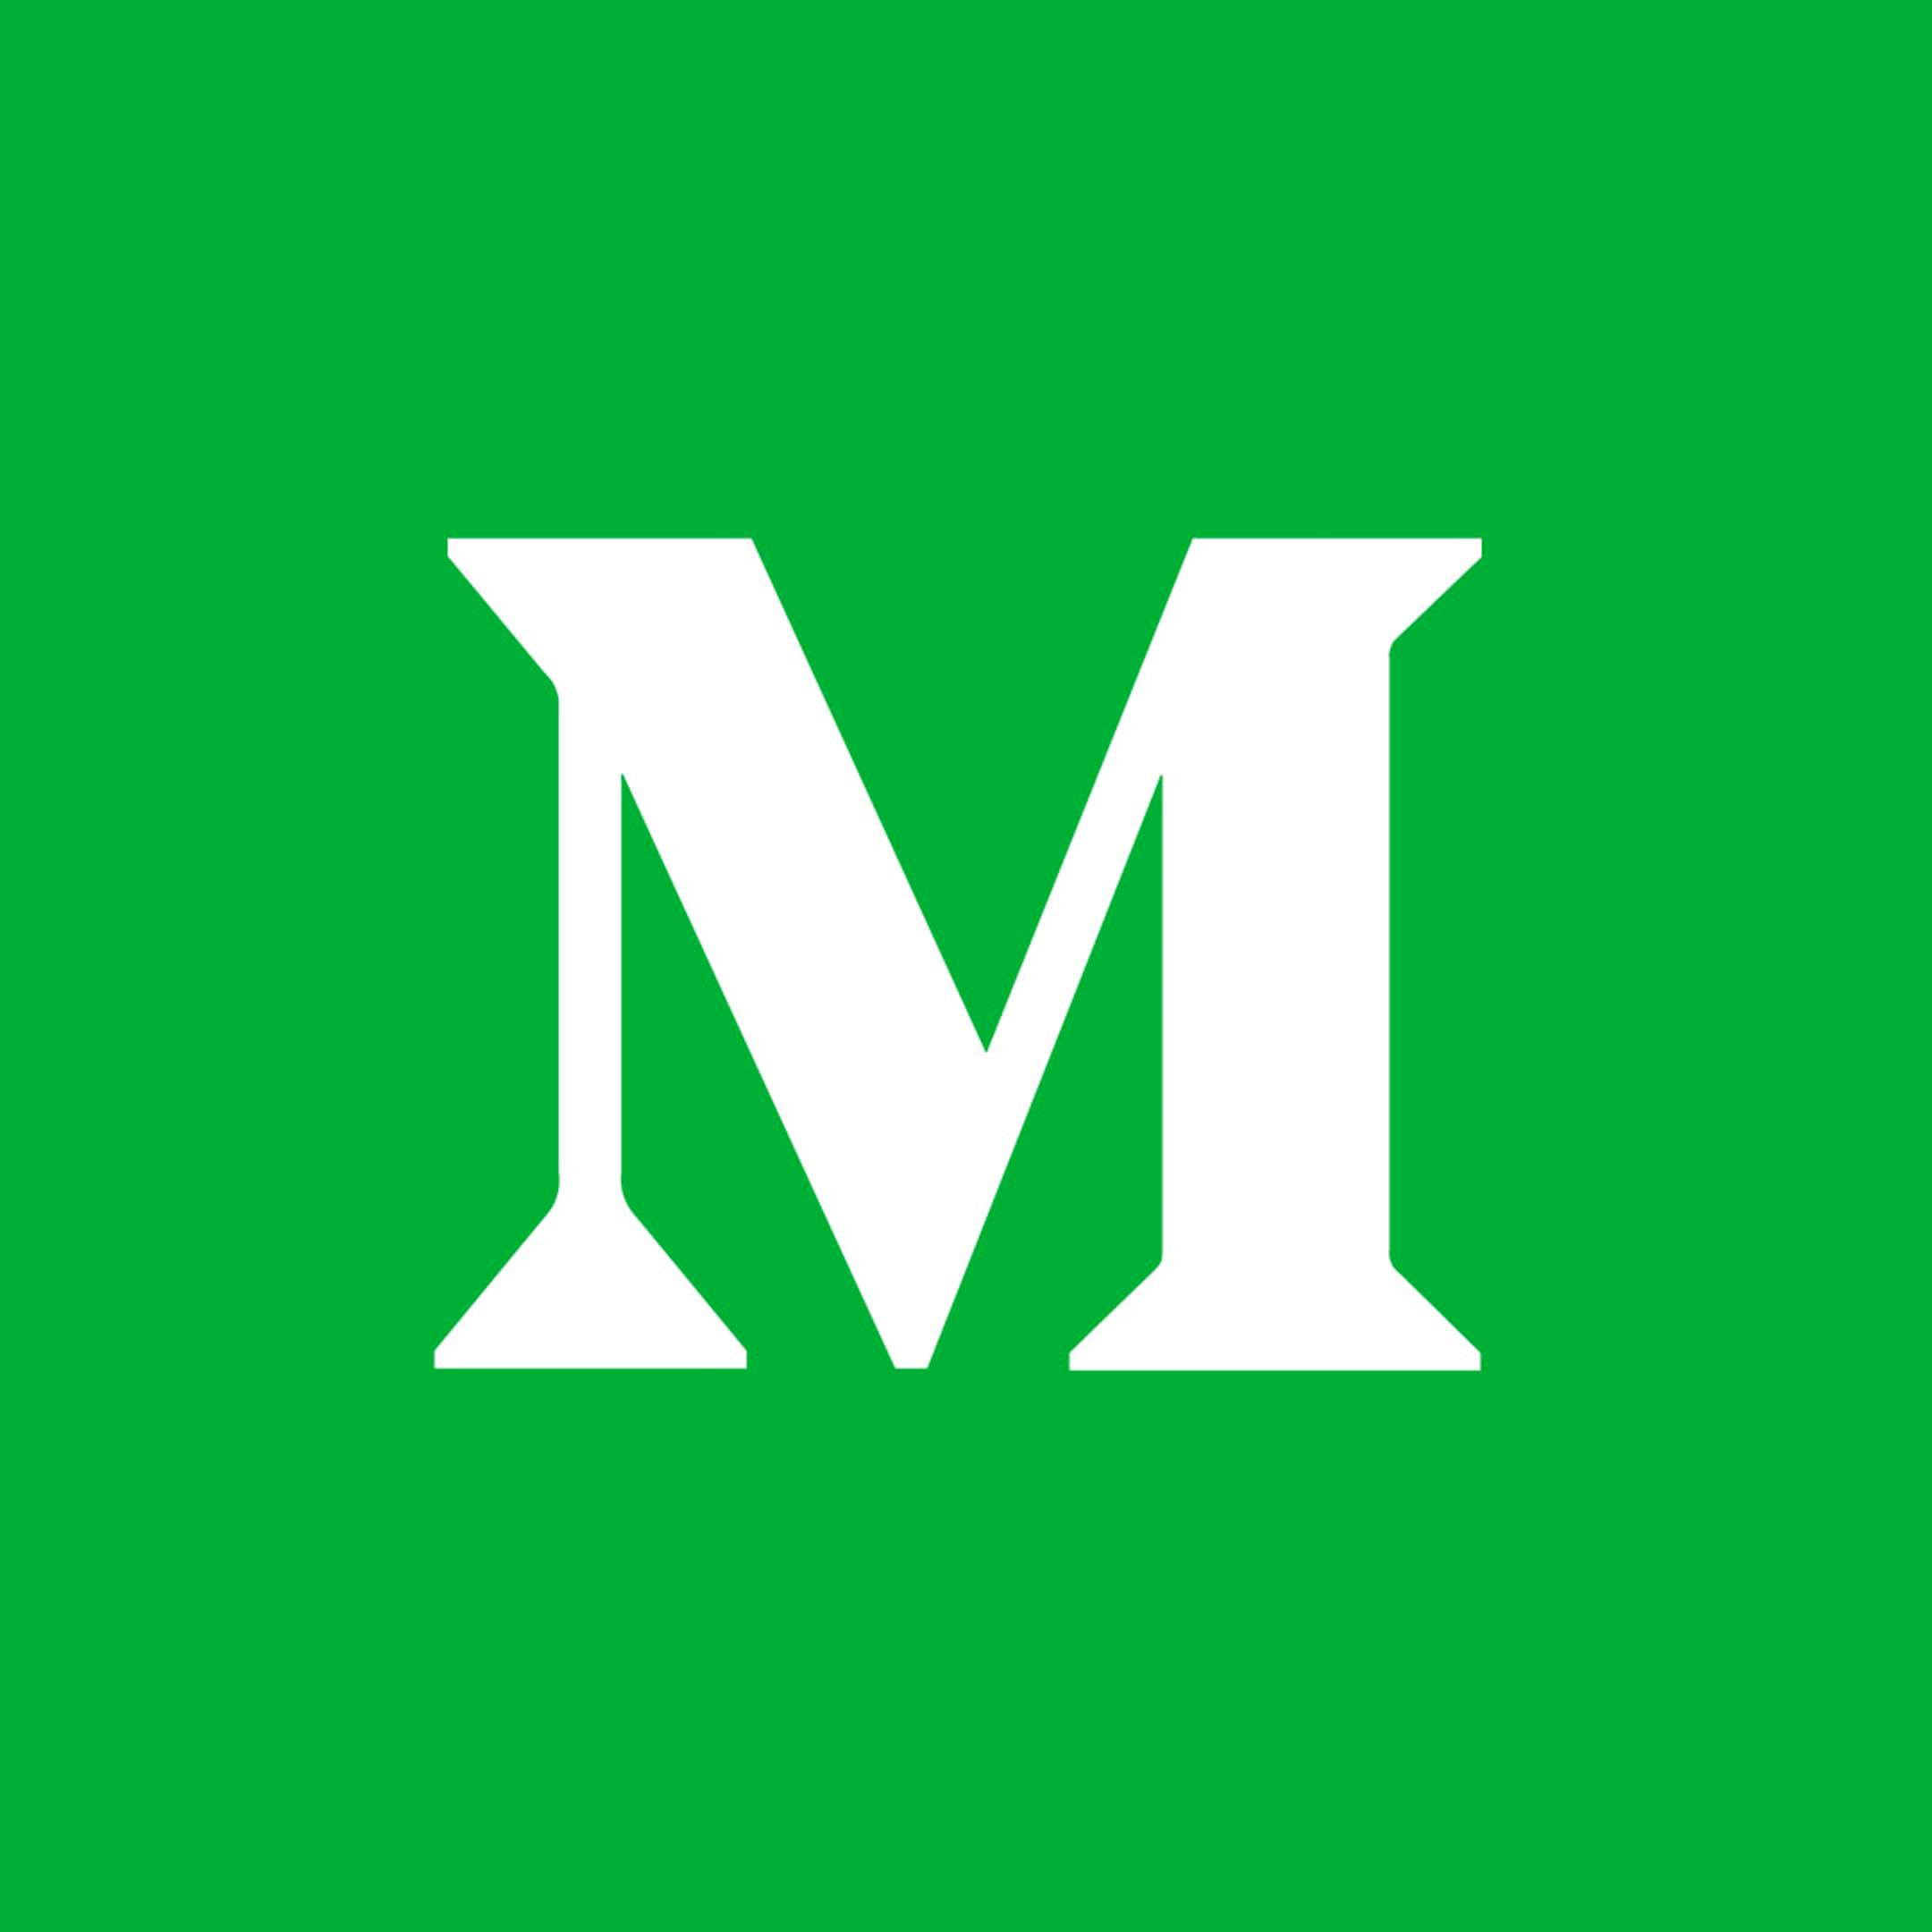 Medium logo on green background 